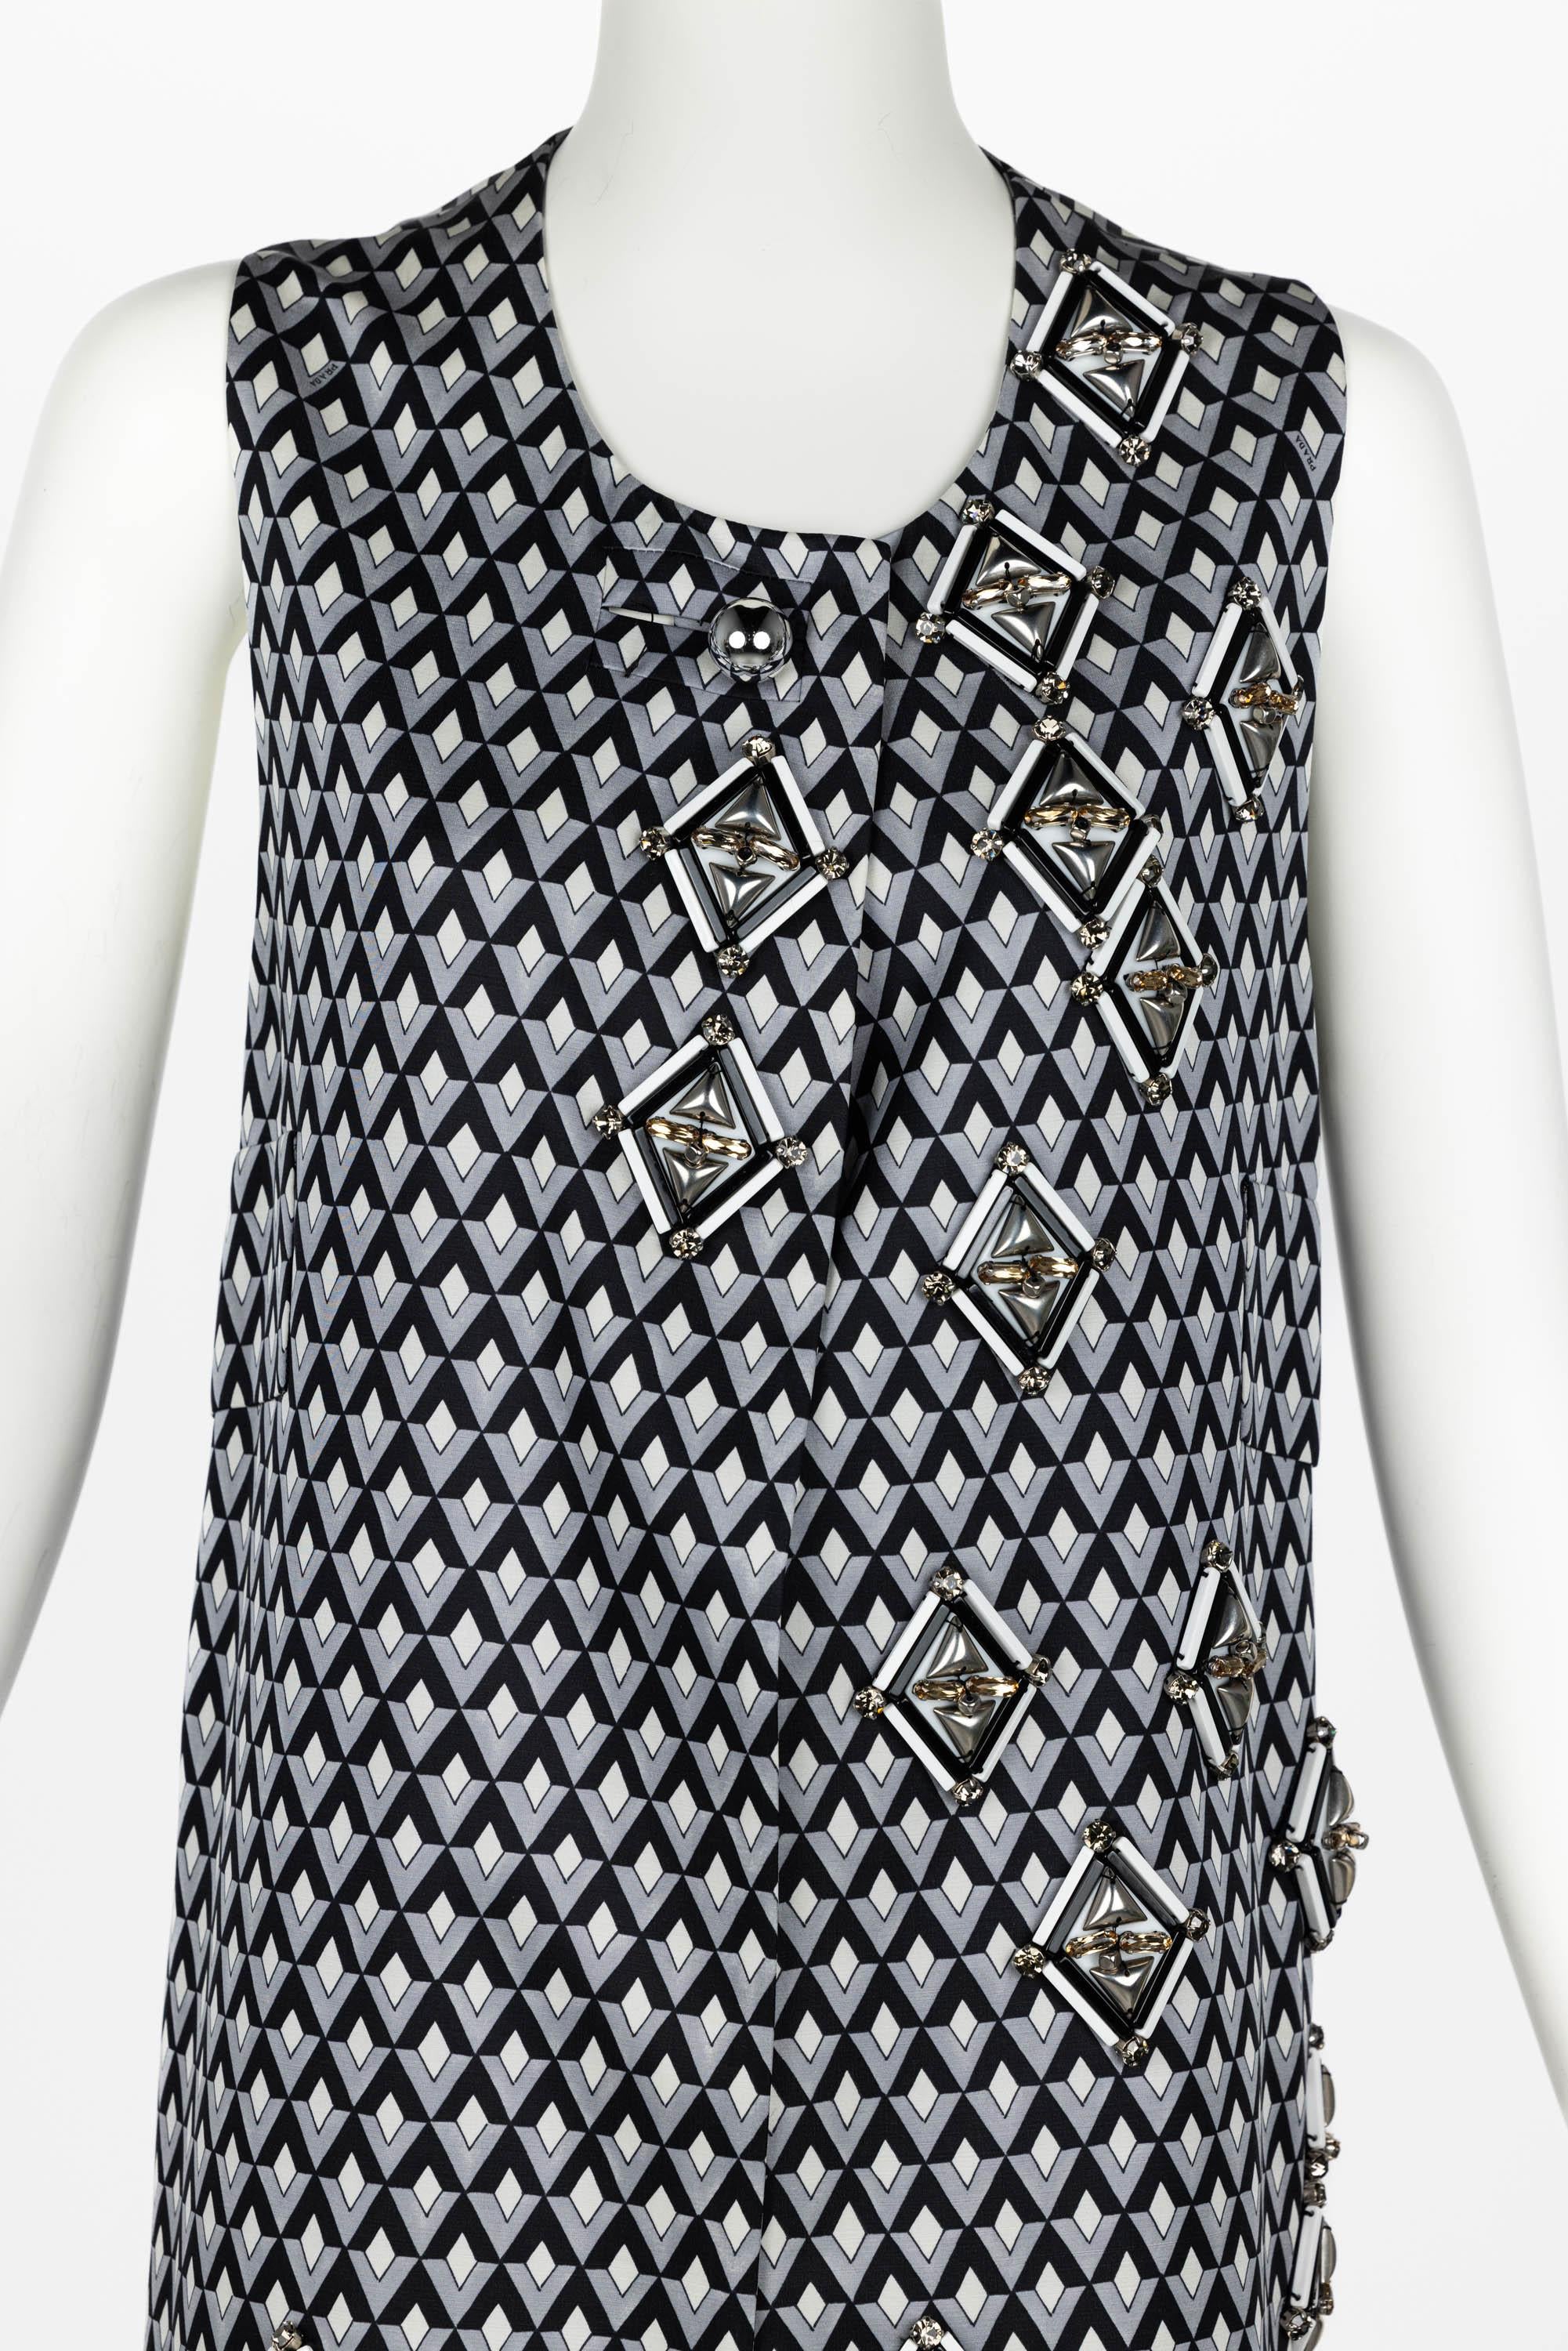 Prada F/W 2012 Geometric Print Crystal & Plexi Embellished Maxi Vest 3